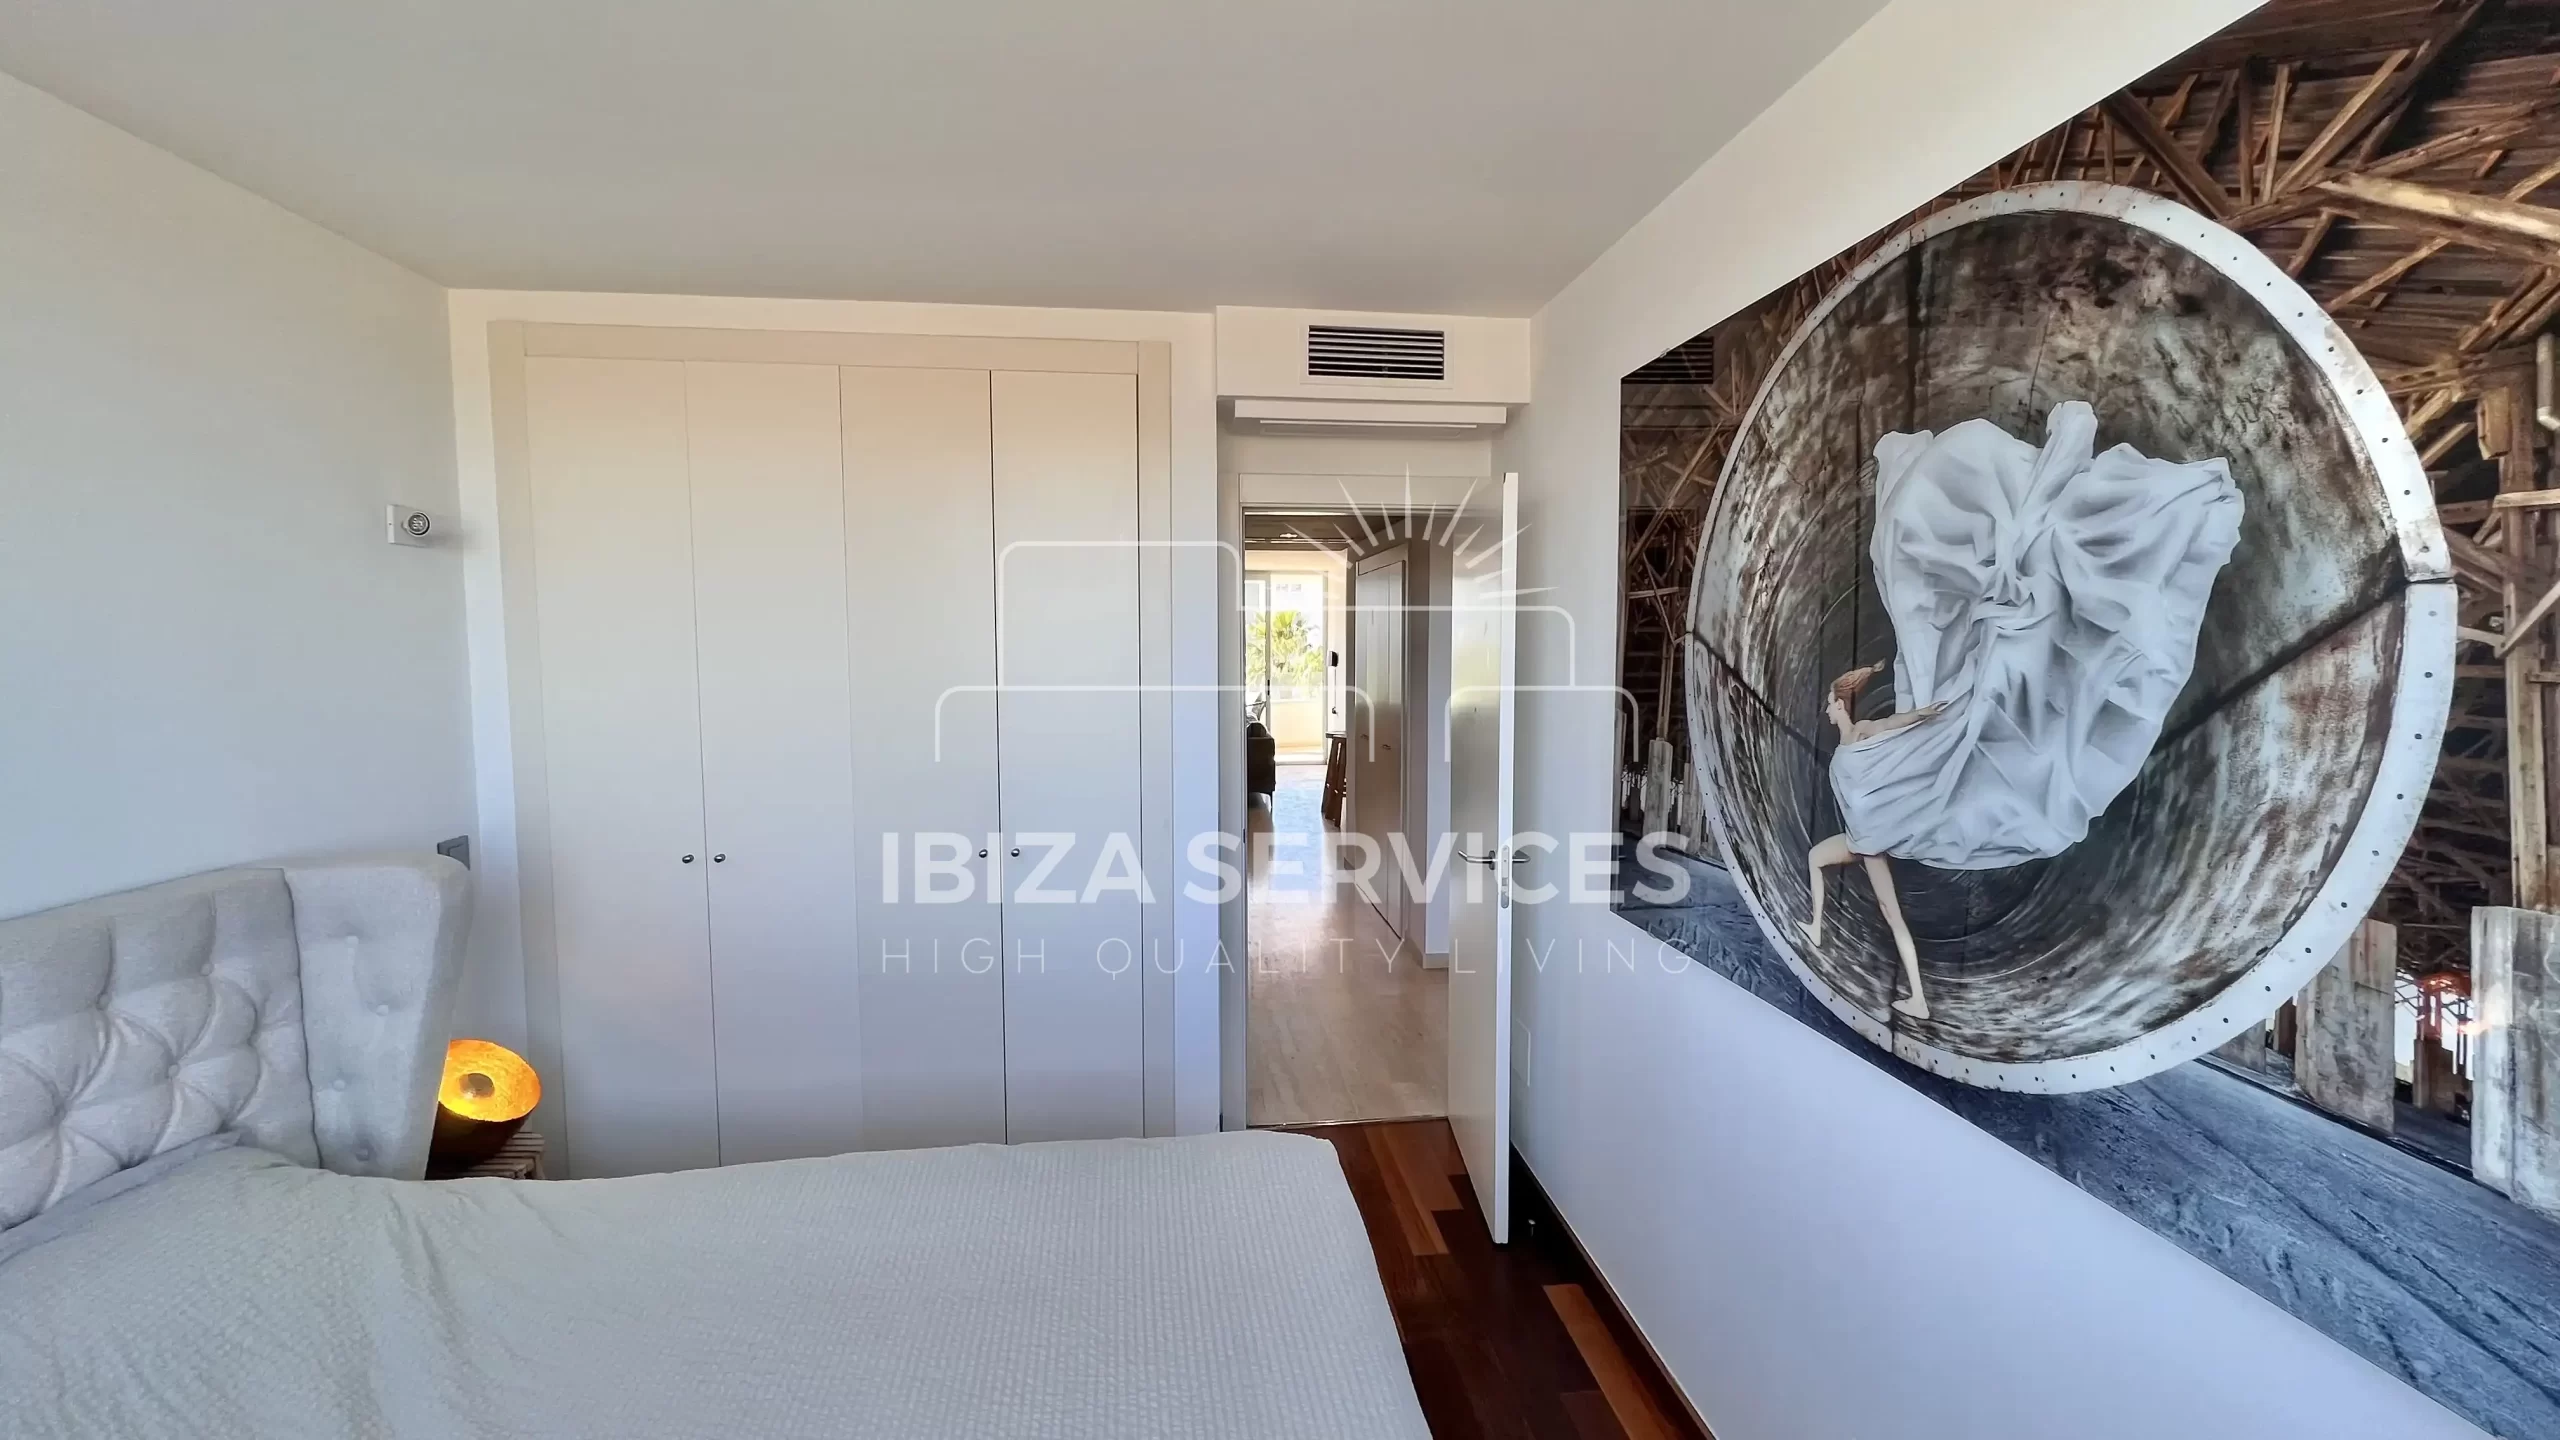 Luxury 3 bedroom apartment in Marina Botafoch for seasonal rental